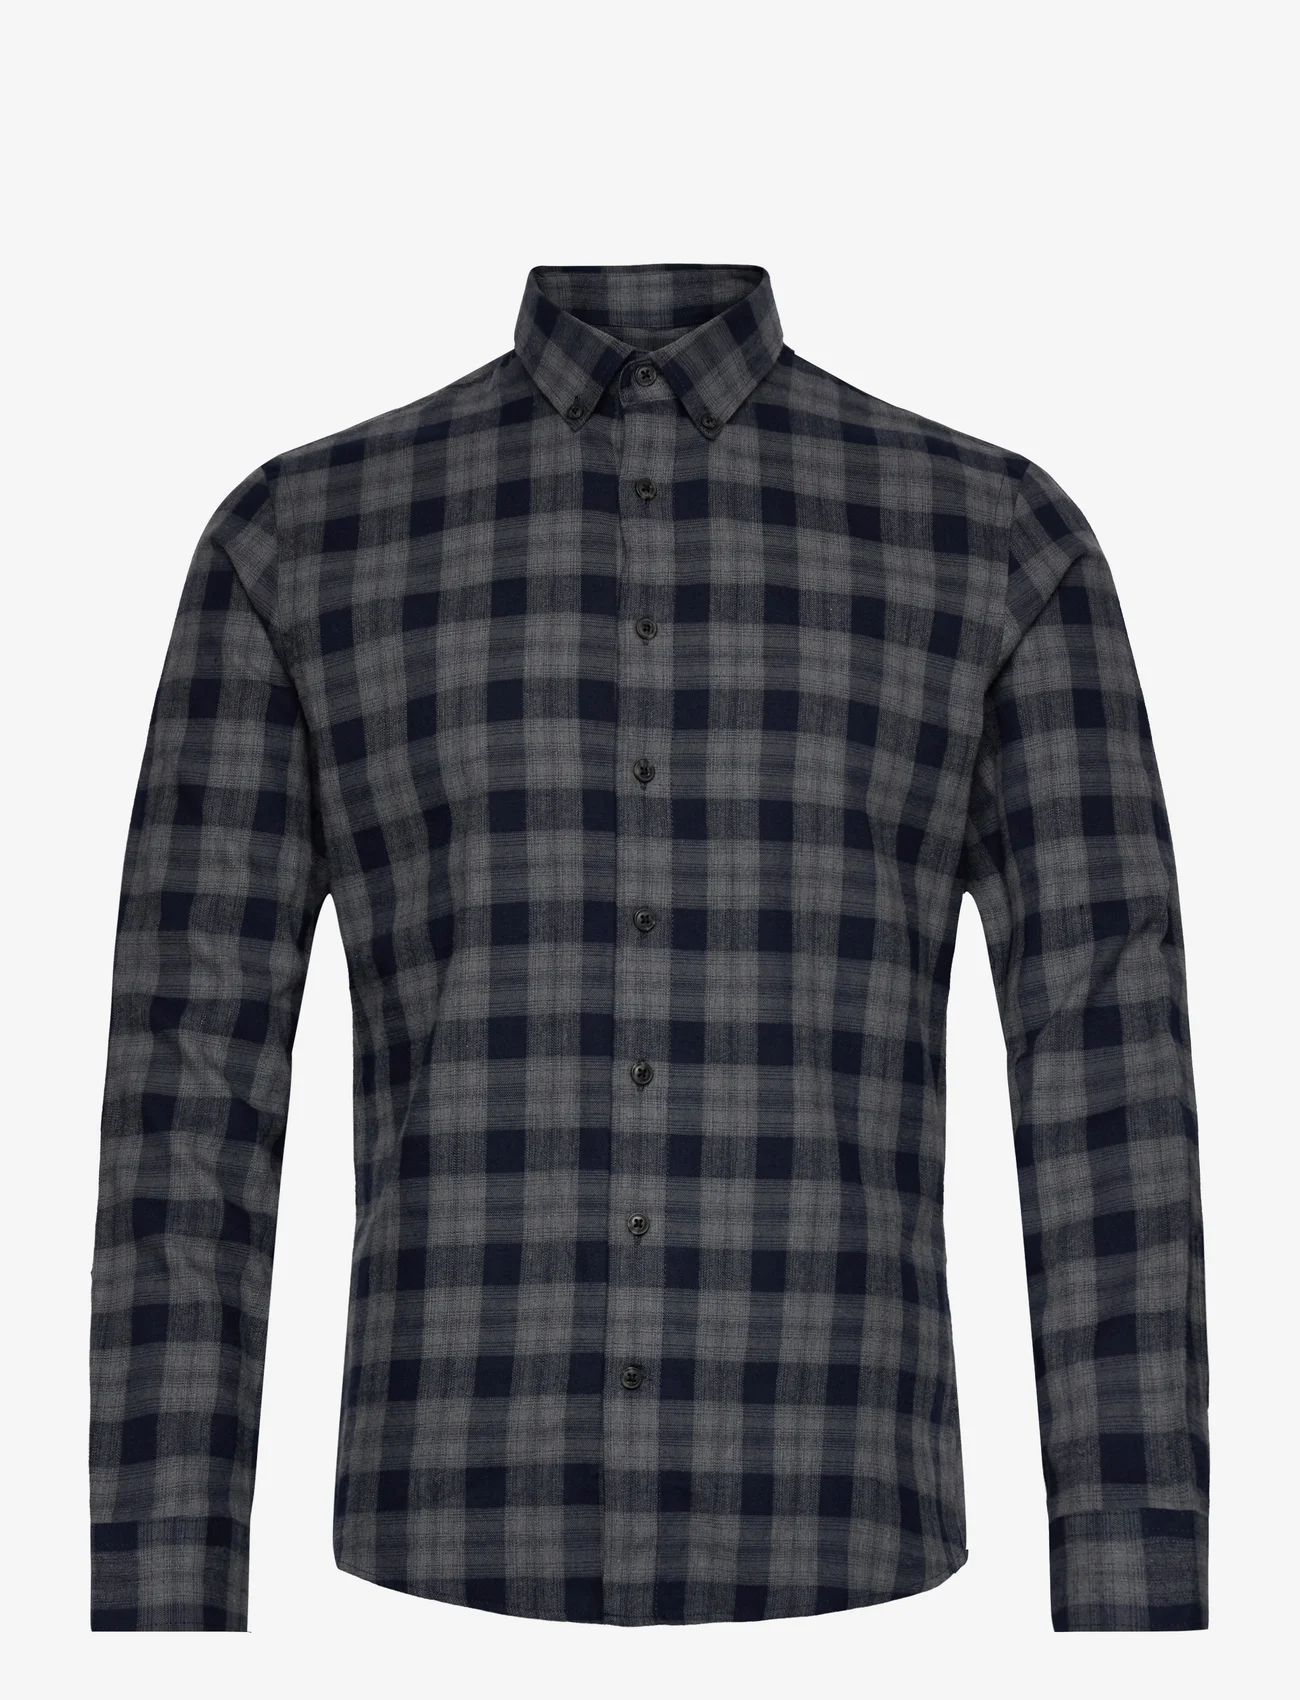 Lindbergh - Ultra soft checked shirt L/S - nordic style - dk grey - 1